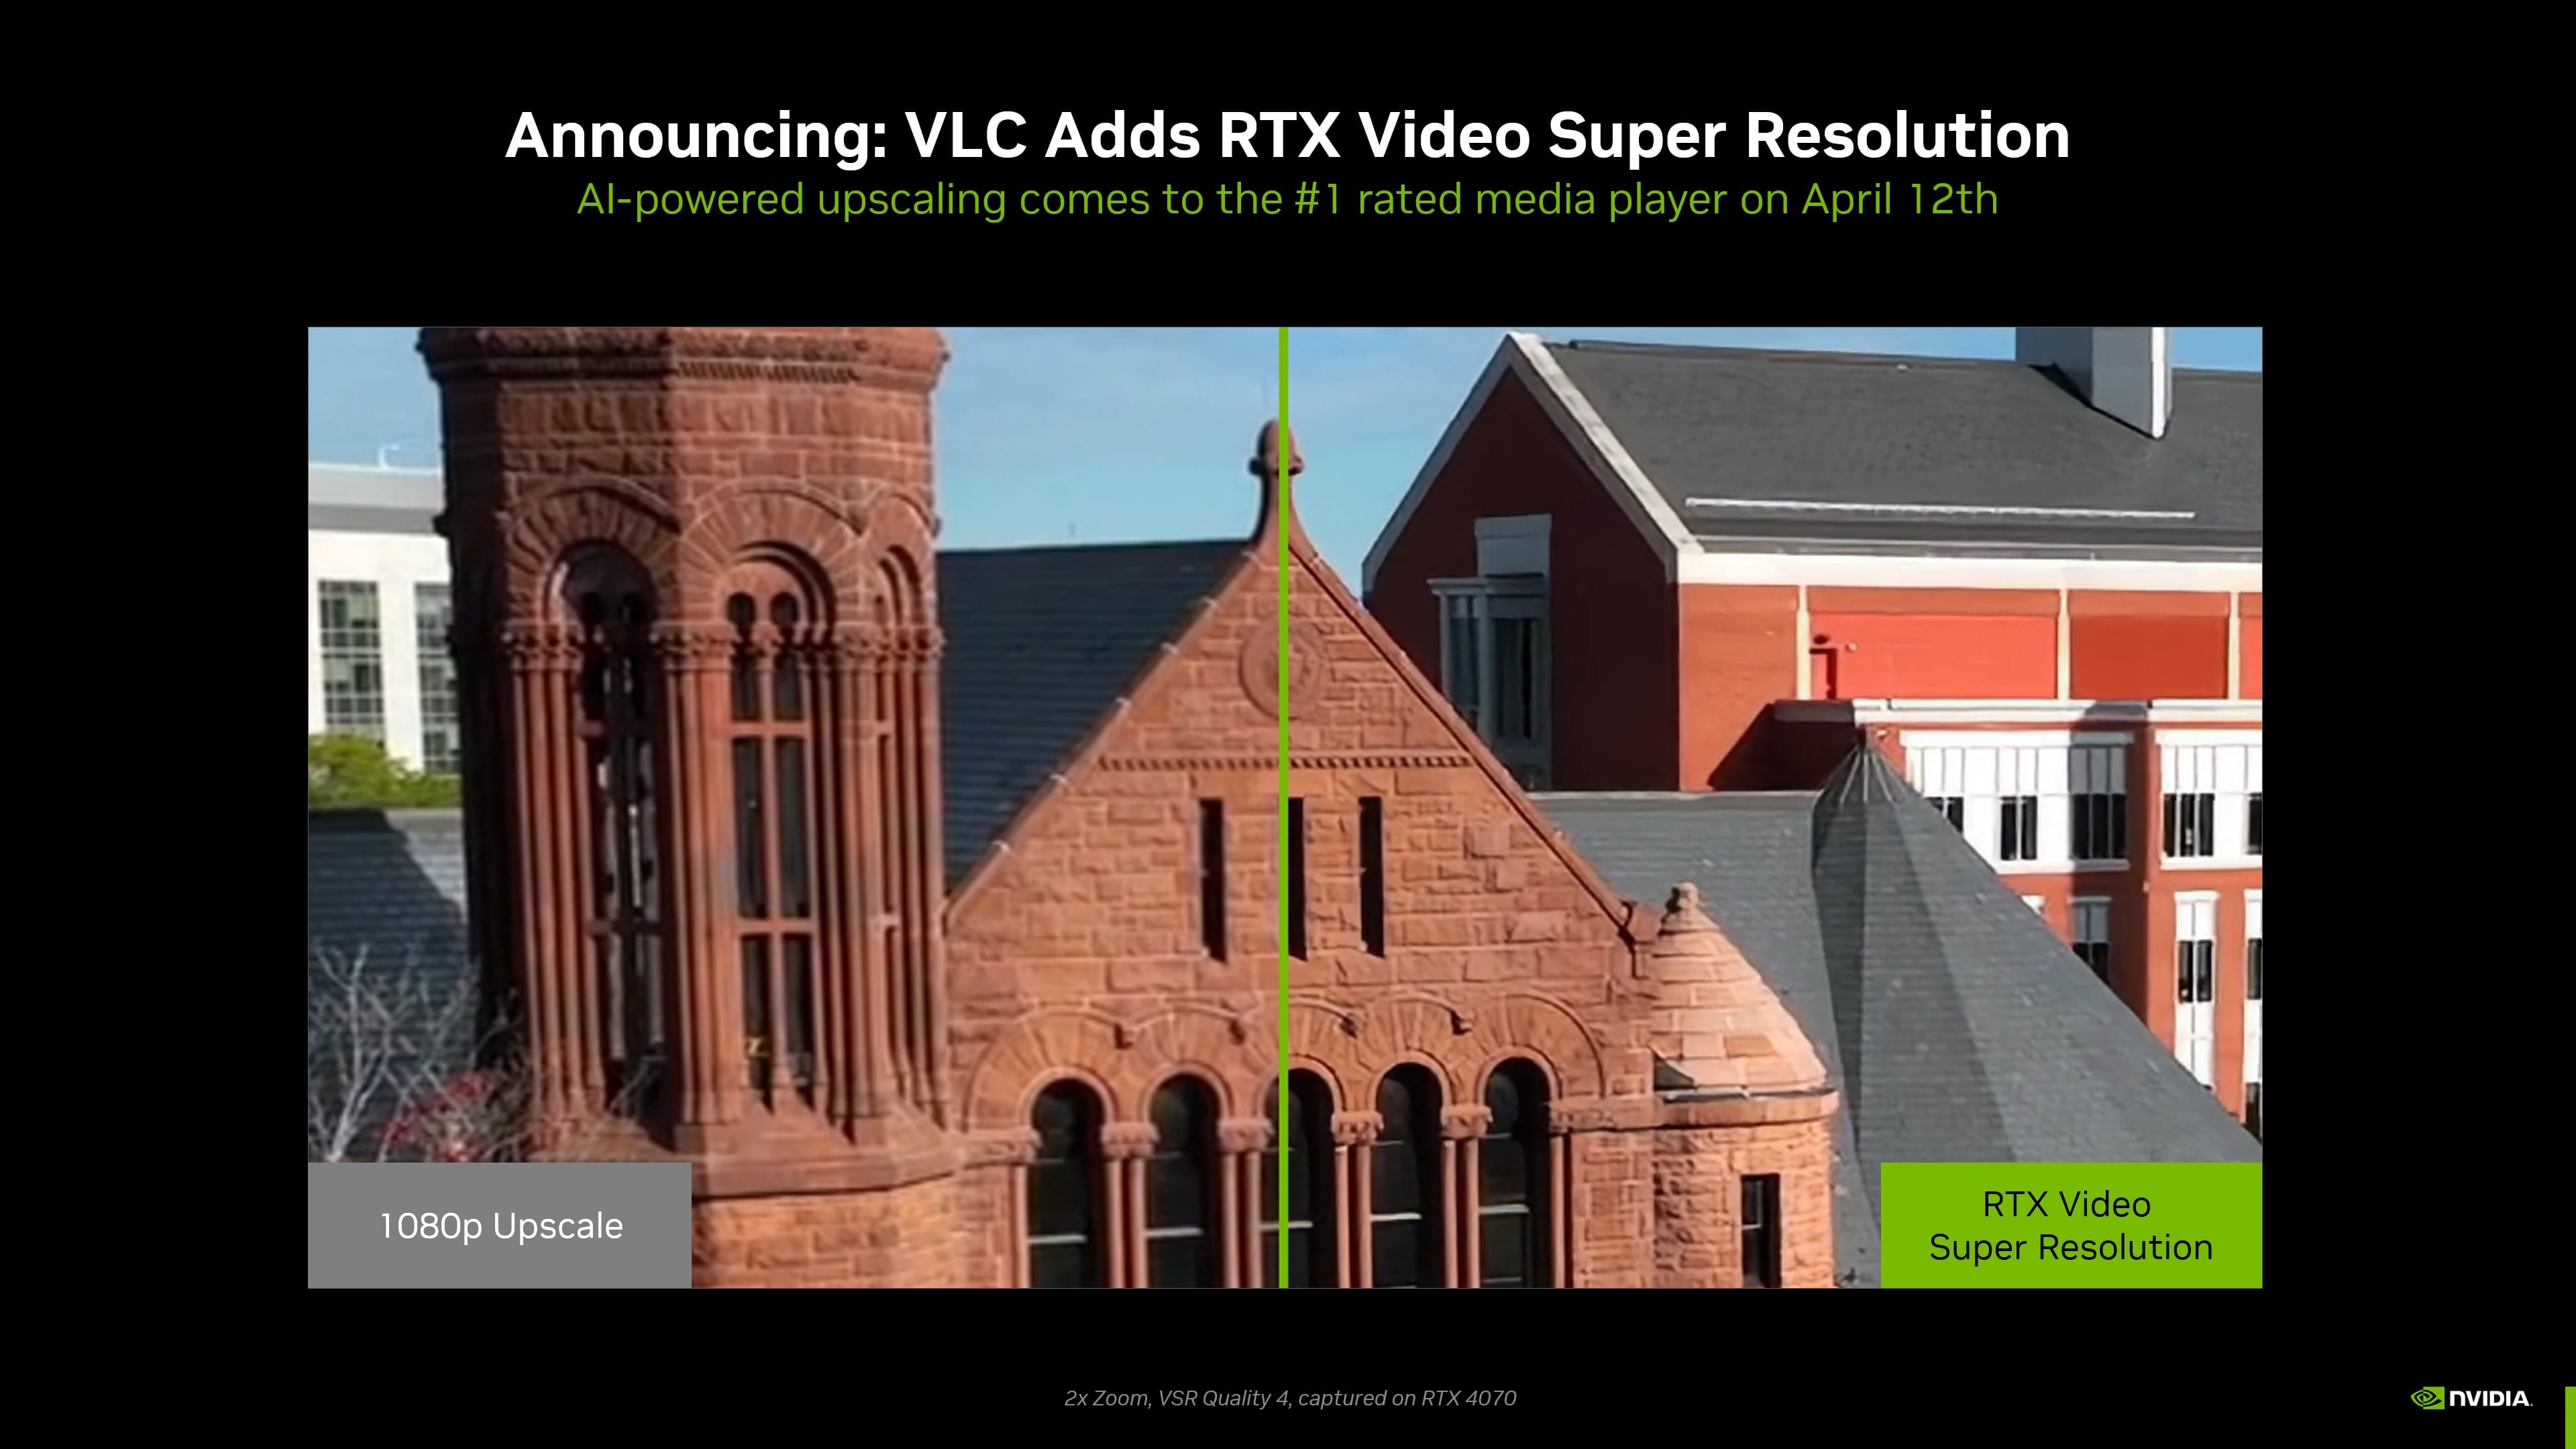 vlc-adds-rtx-video-super-resolution(1).jpg